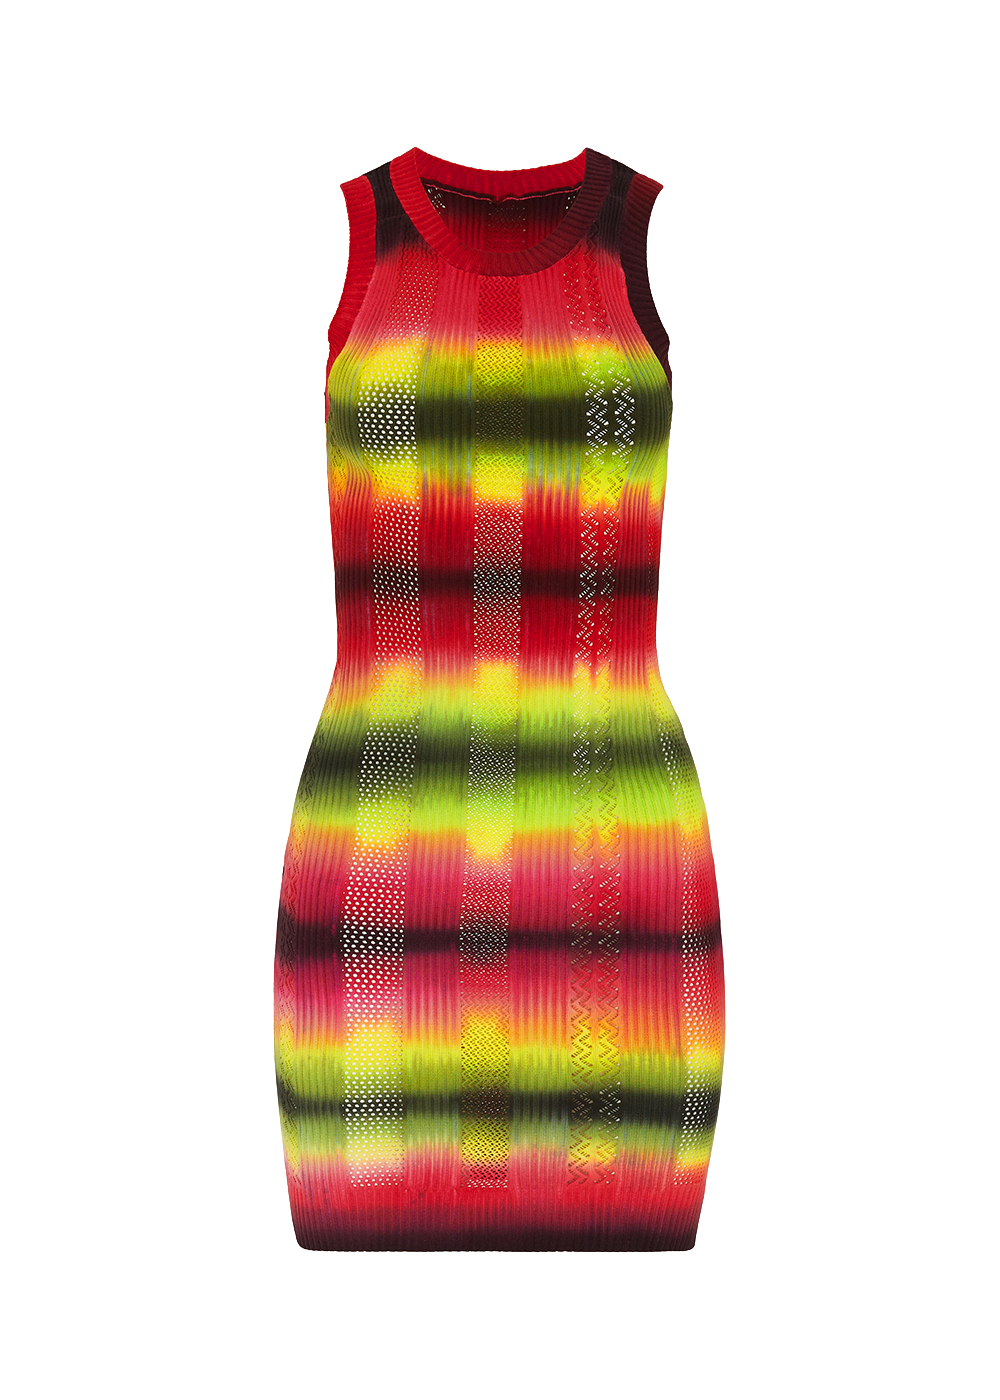 AGR - Tie-dye Tank Dress - Packshot - Front